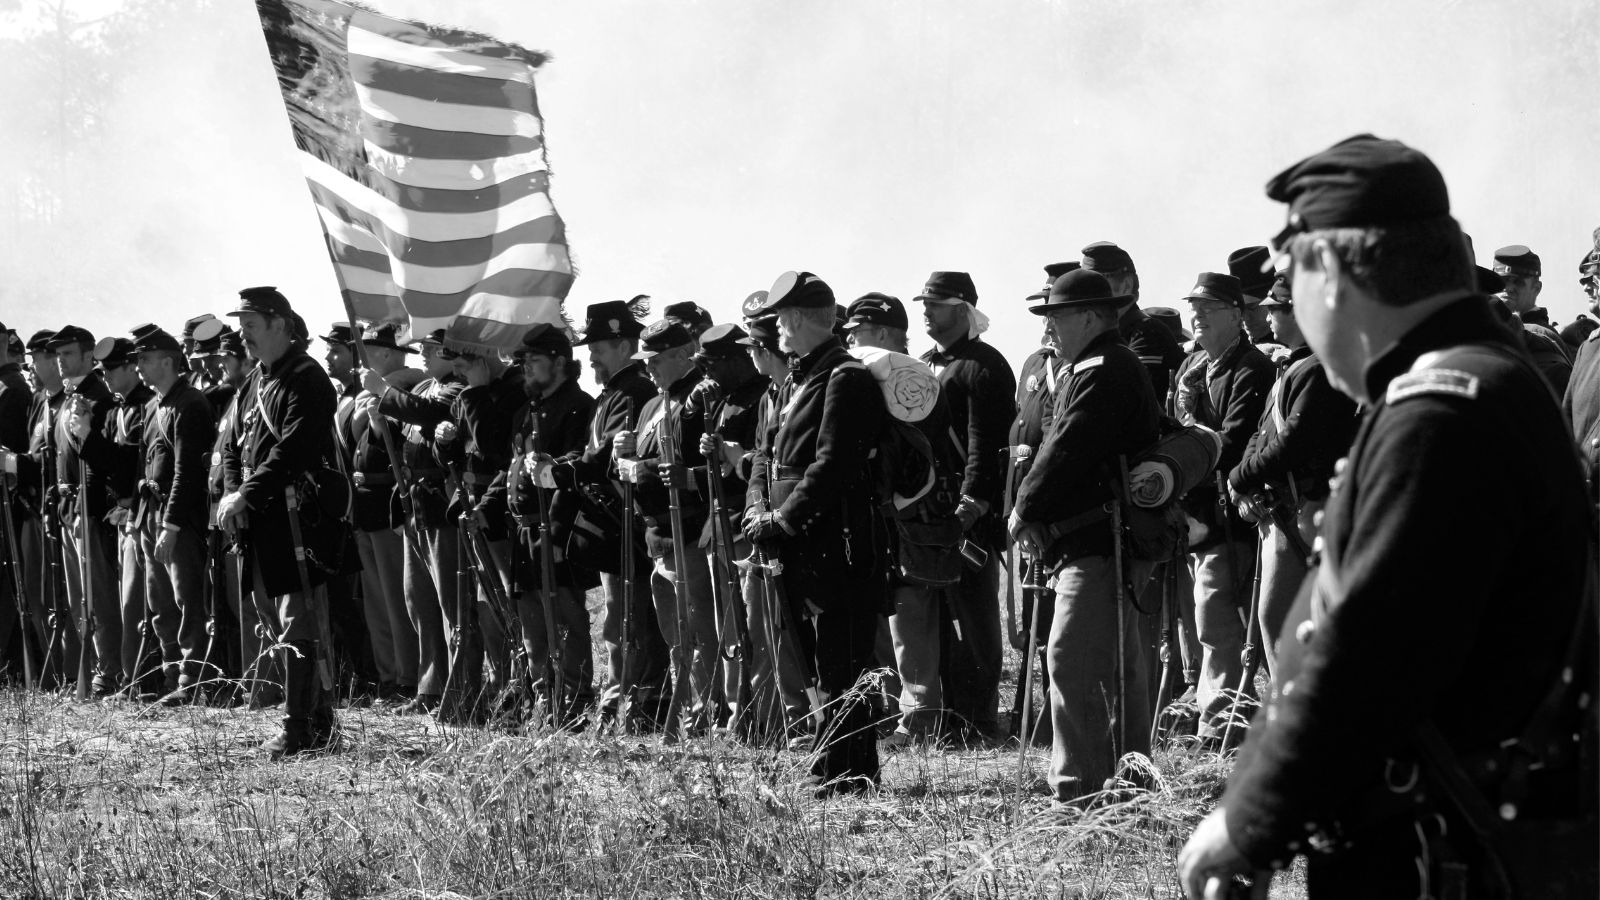 Union Civil War reenactment soldiers